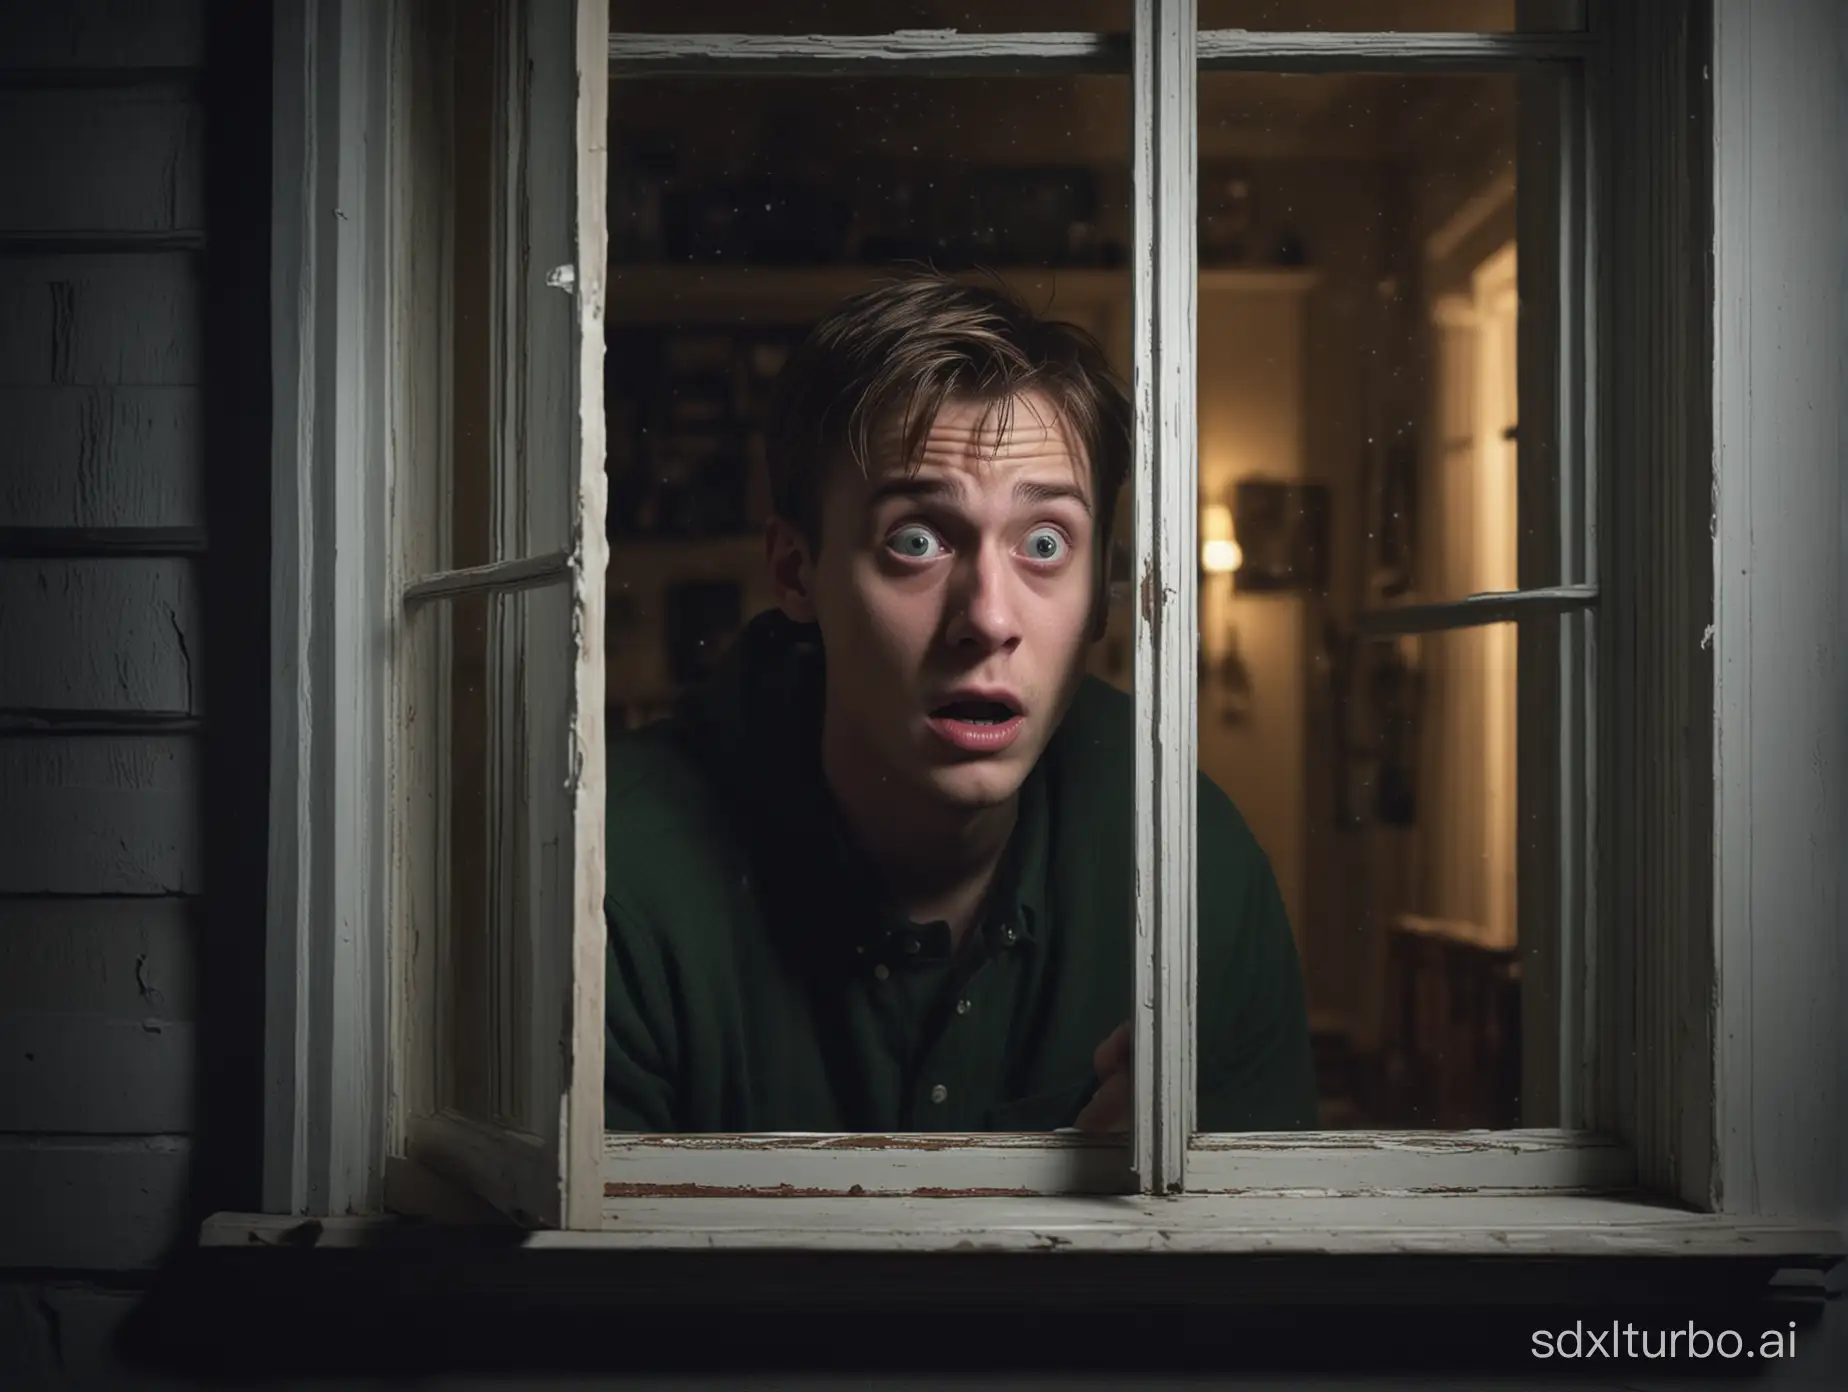 Eerie-Night-Terrified-Youth-Peering-Through-Window-in-True-Home-Alone-Horror-Scene